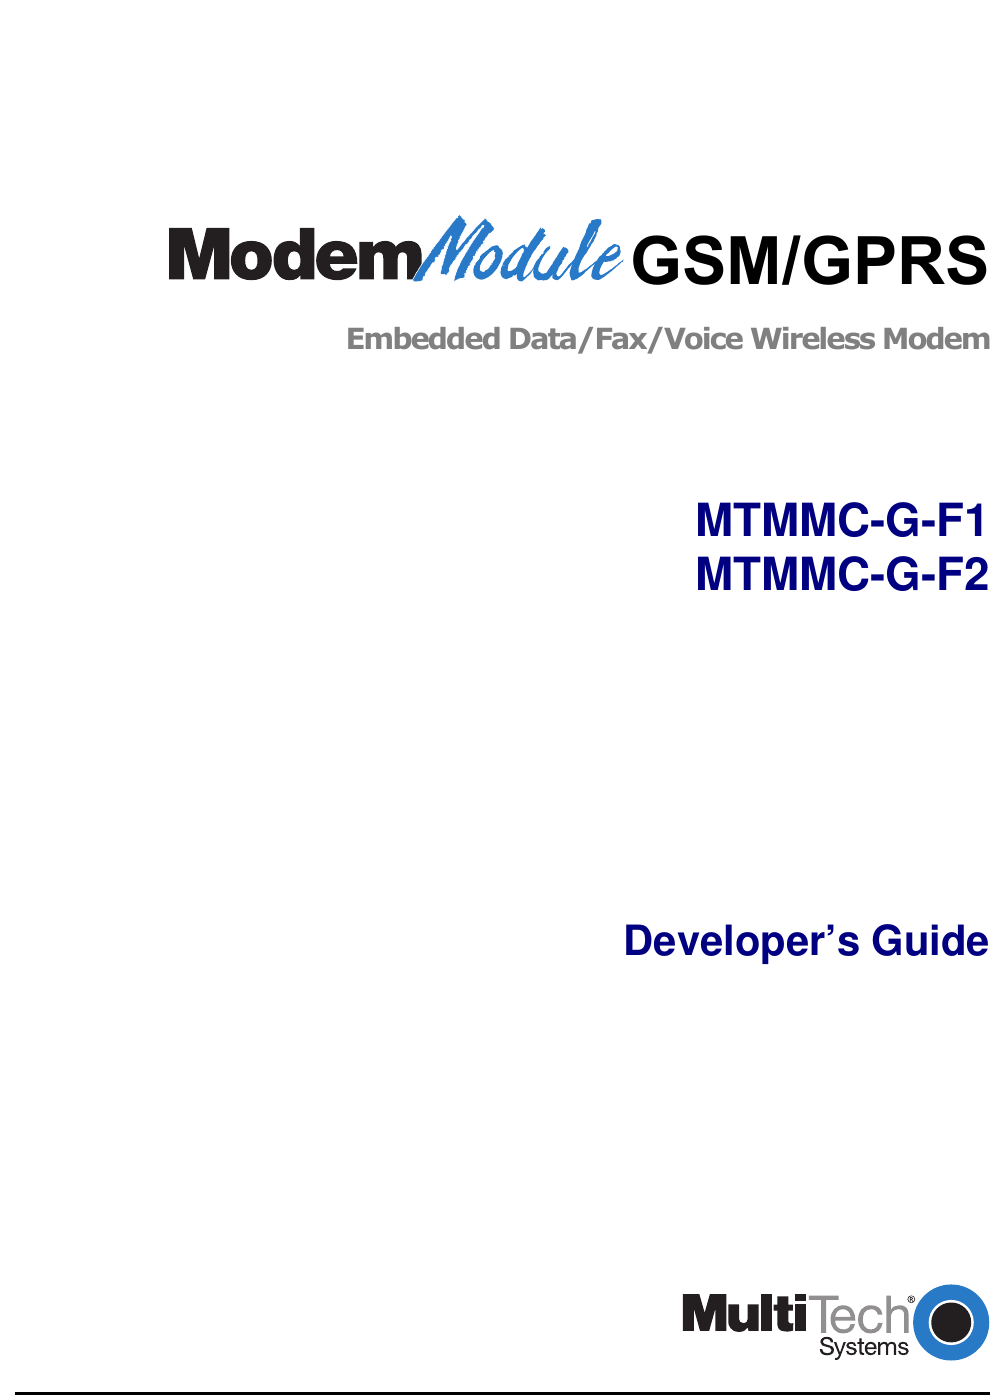  GSM/GPRSEmbedded Data/Fax/Voice Wireless Modem MTMMC-G-F1 MTMMC-G-F2Developer’s Guide